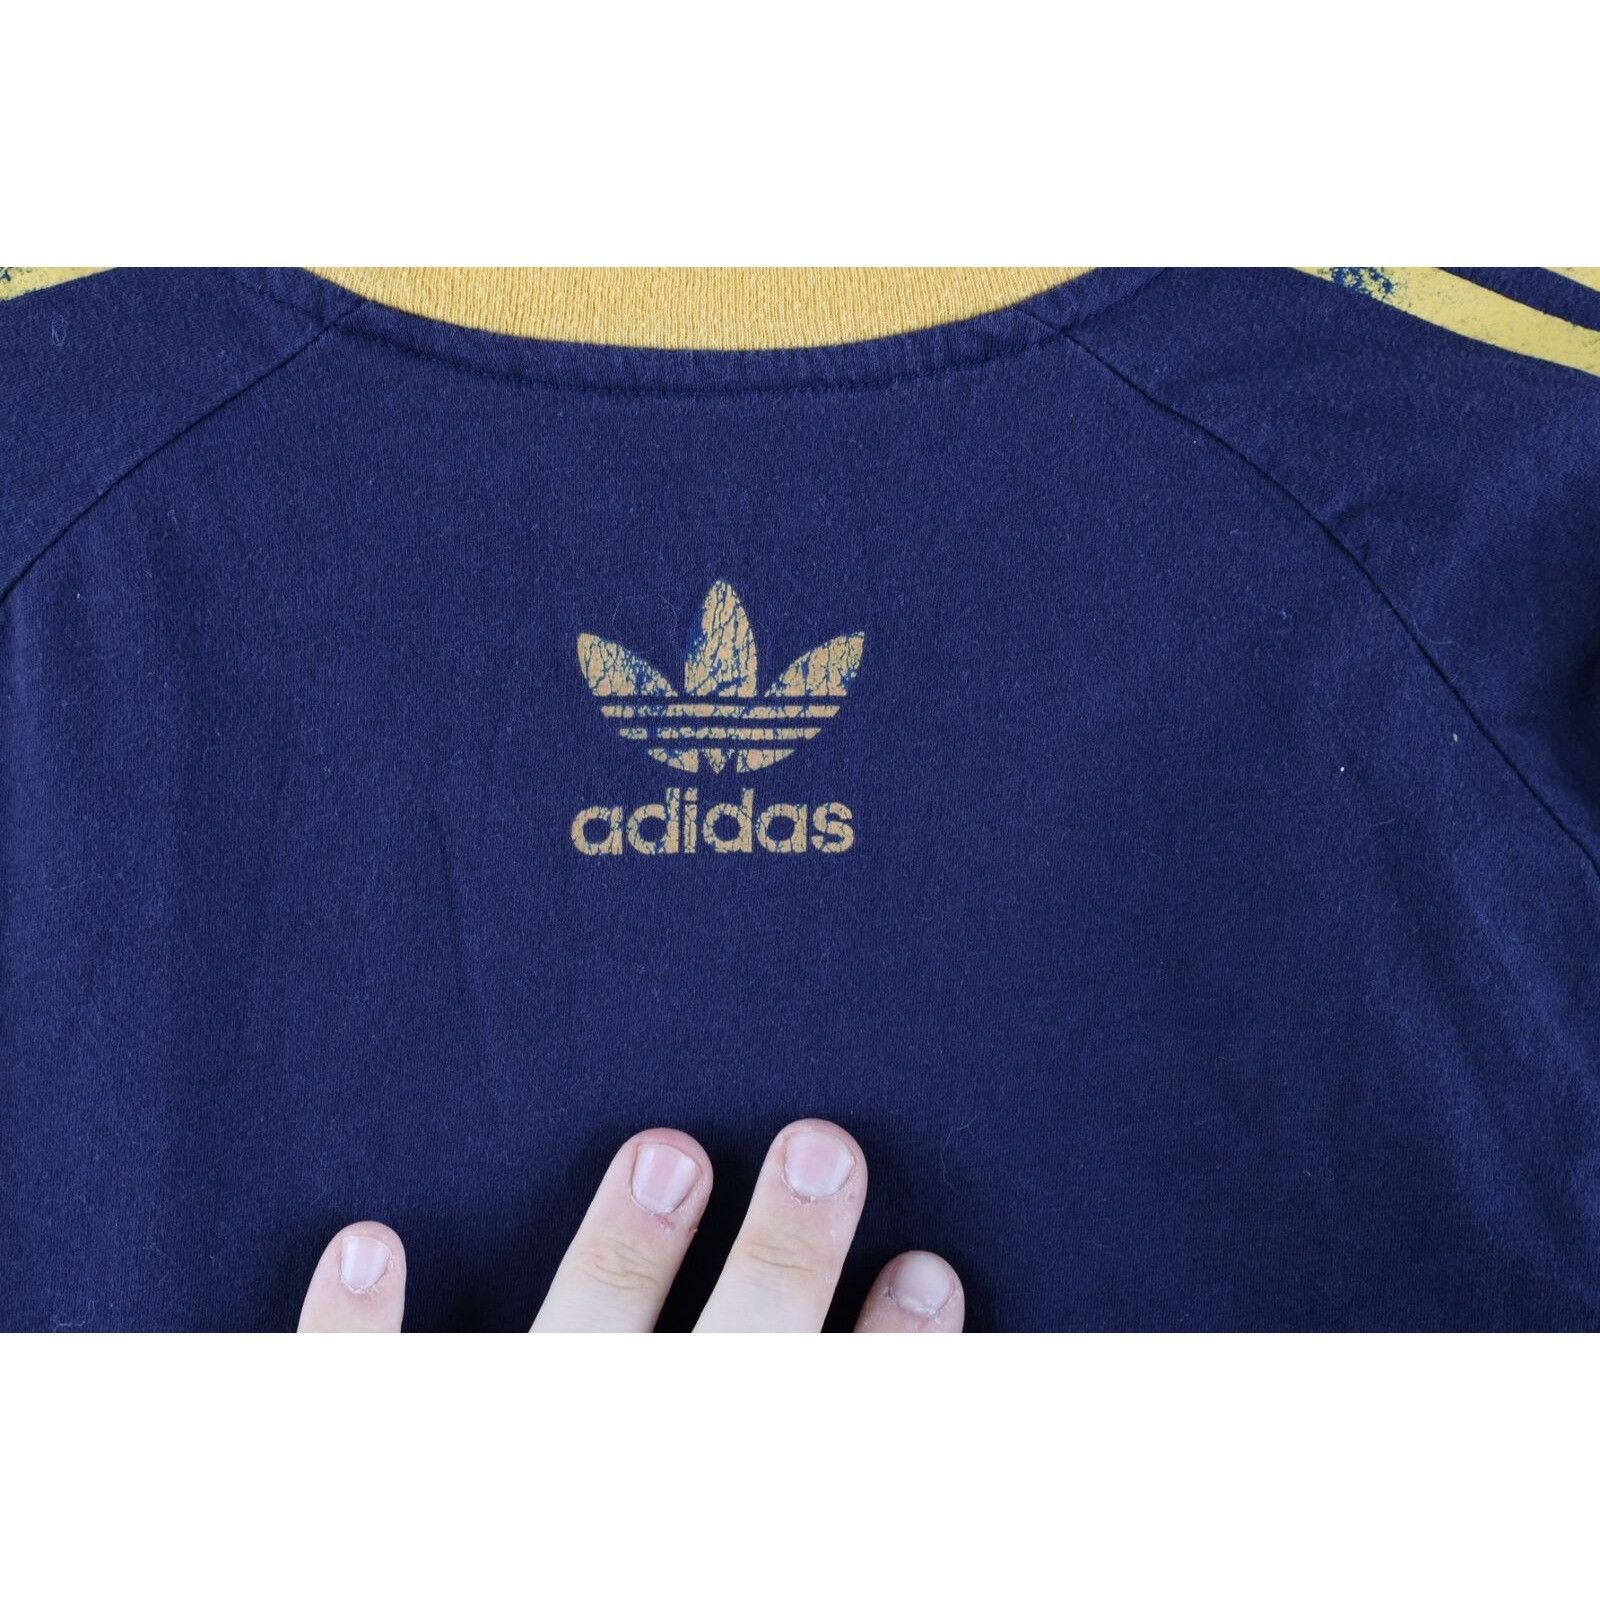 Adidas Adidas Retro University of Michigan Spell Out Ringer T-Shirt Size US S / EU 44-46 / 1 - 6 Thumbnail